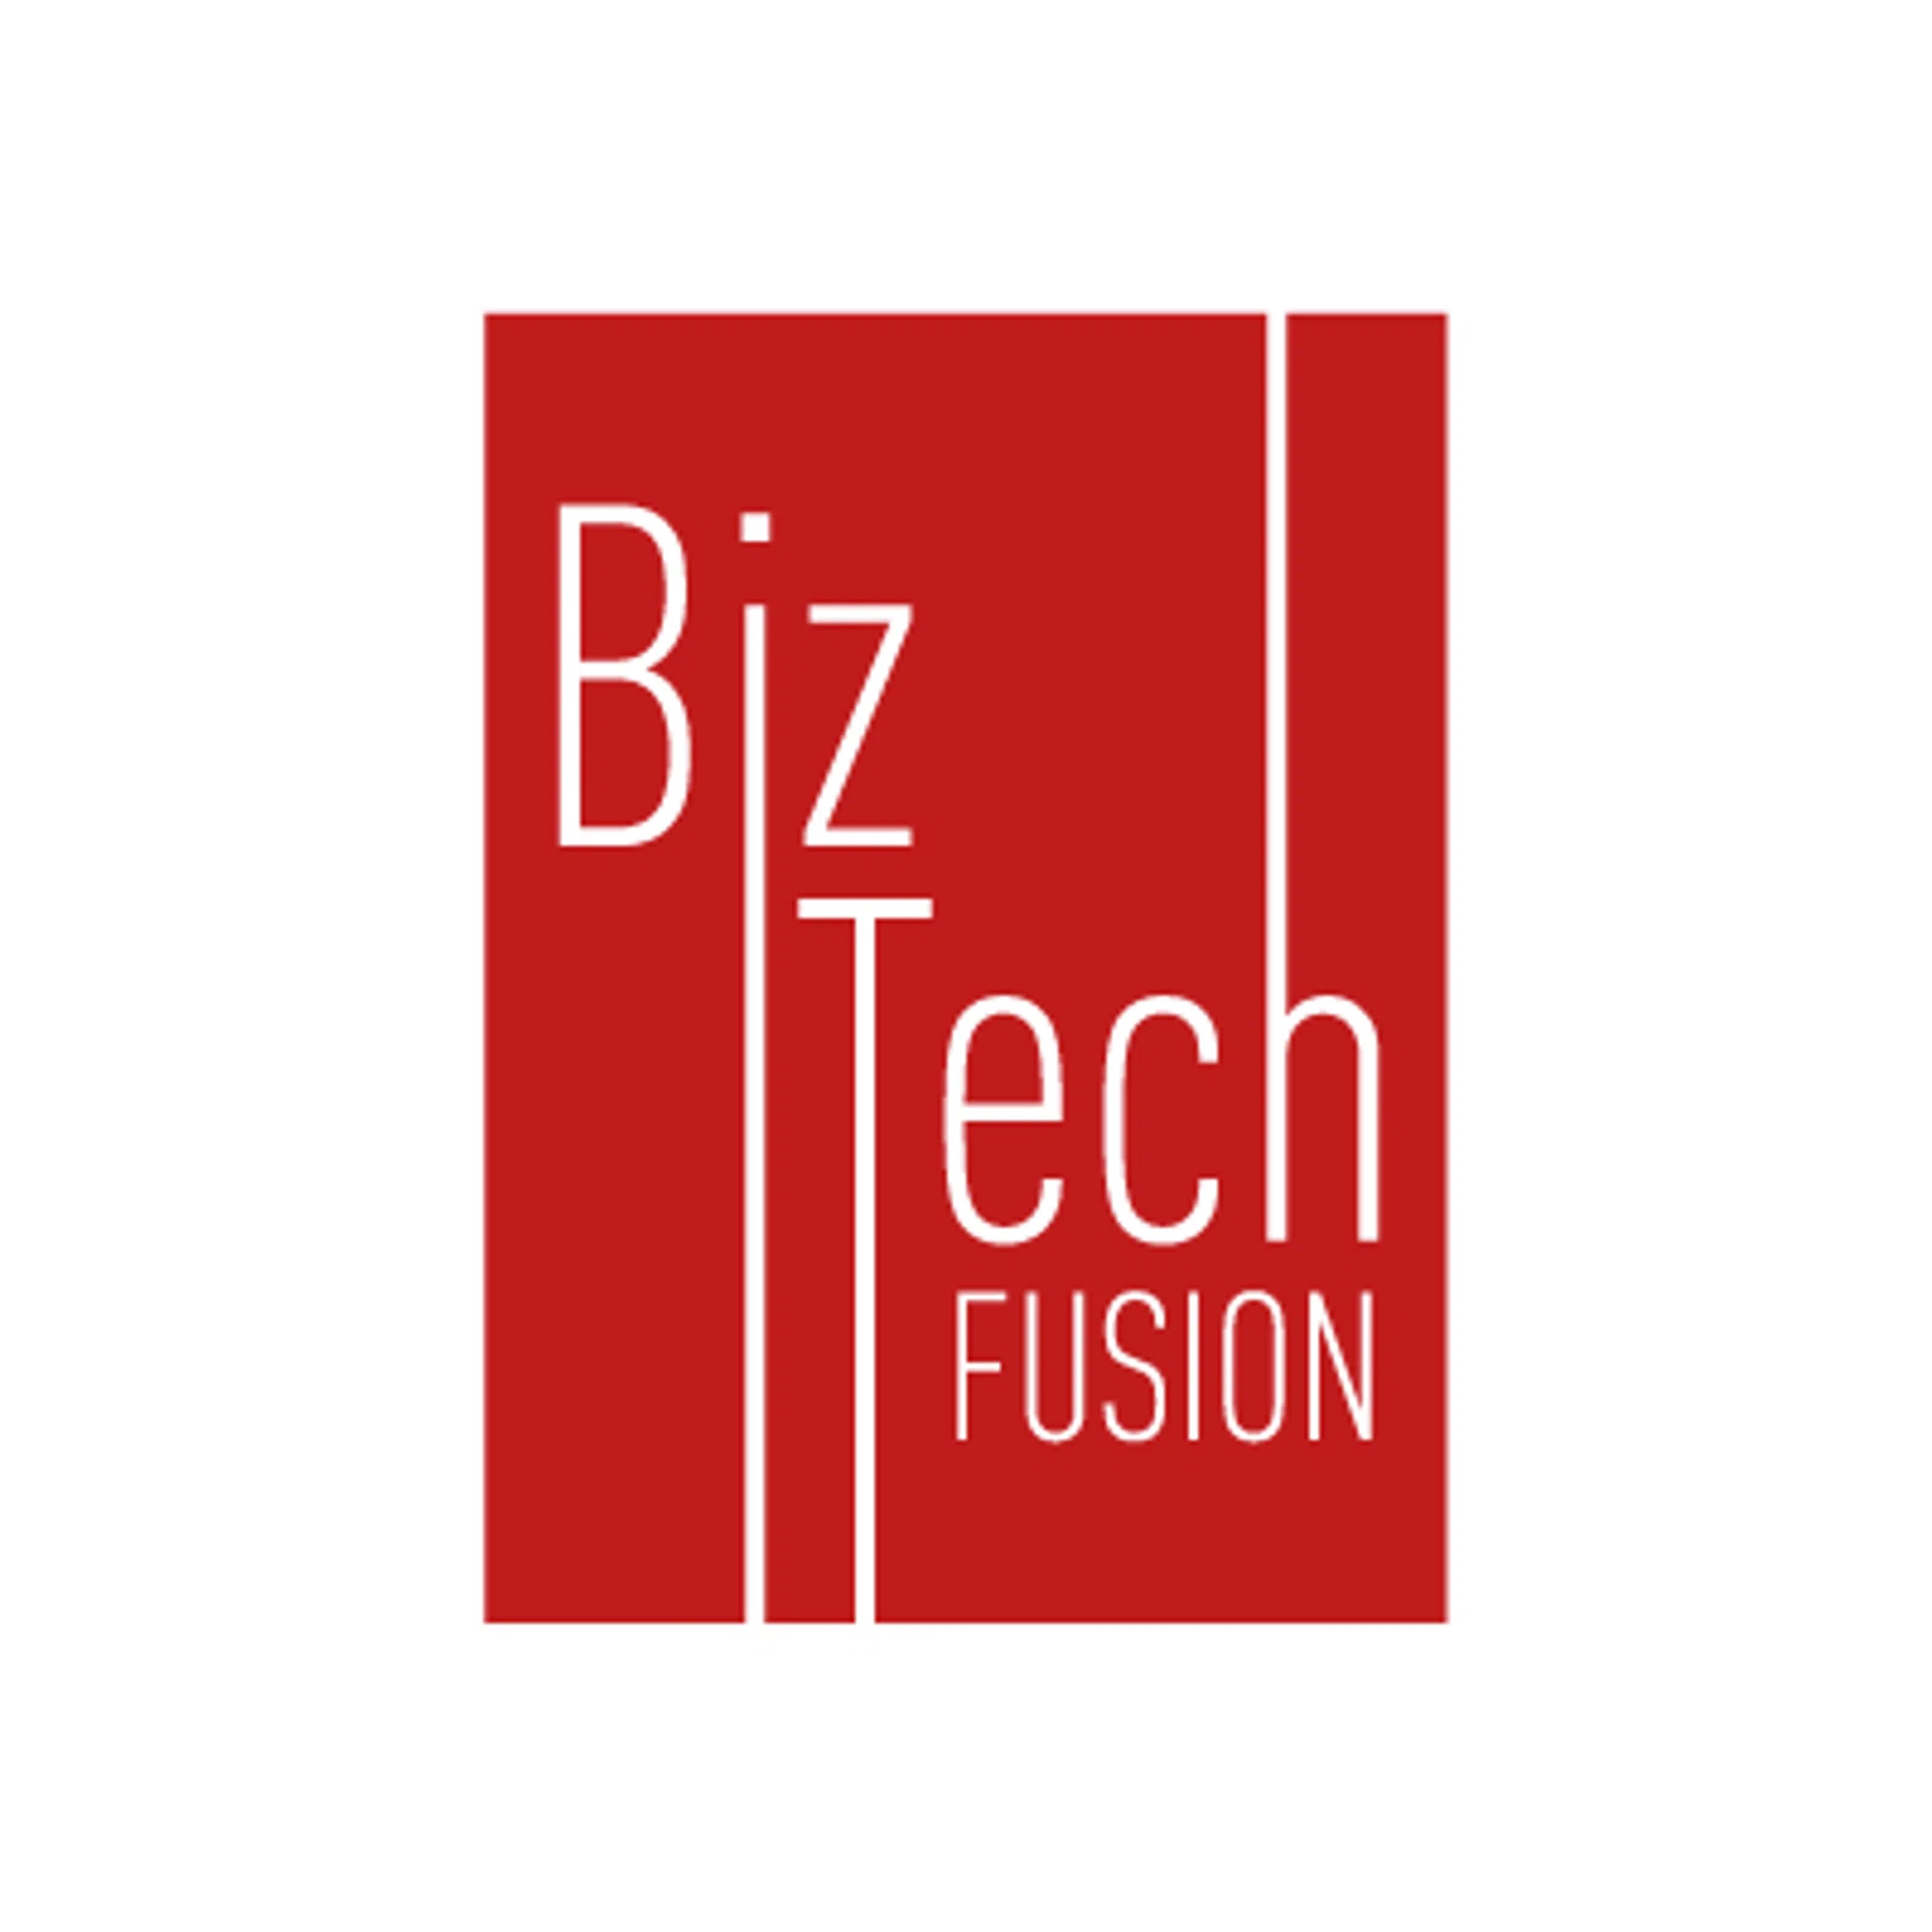 biztechfusion.com logo